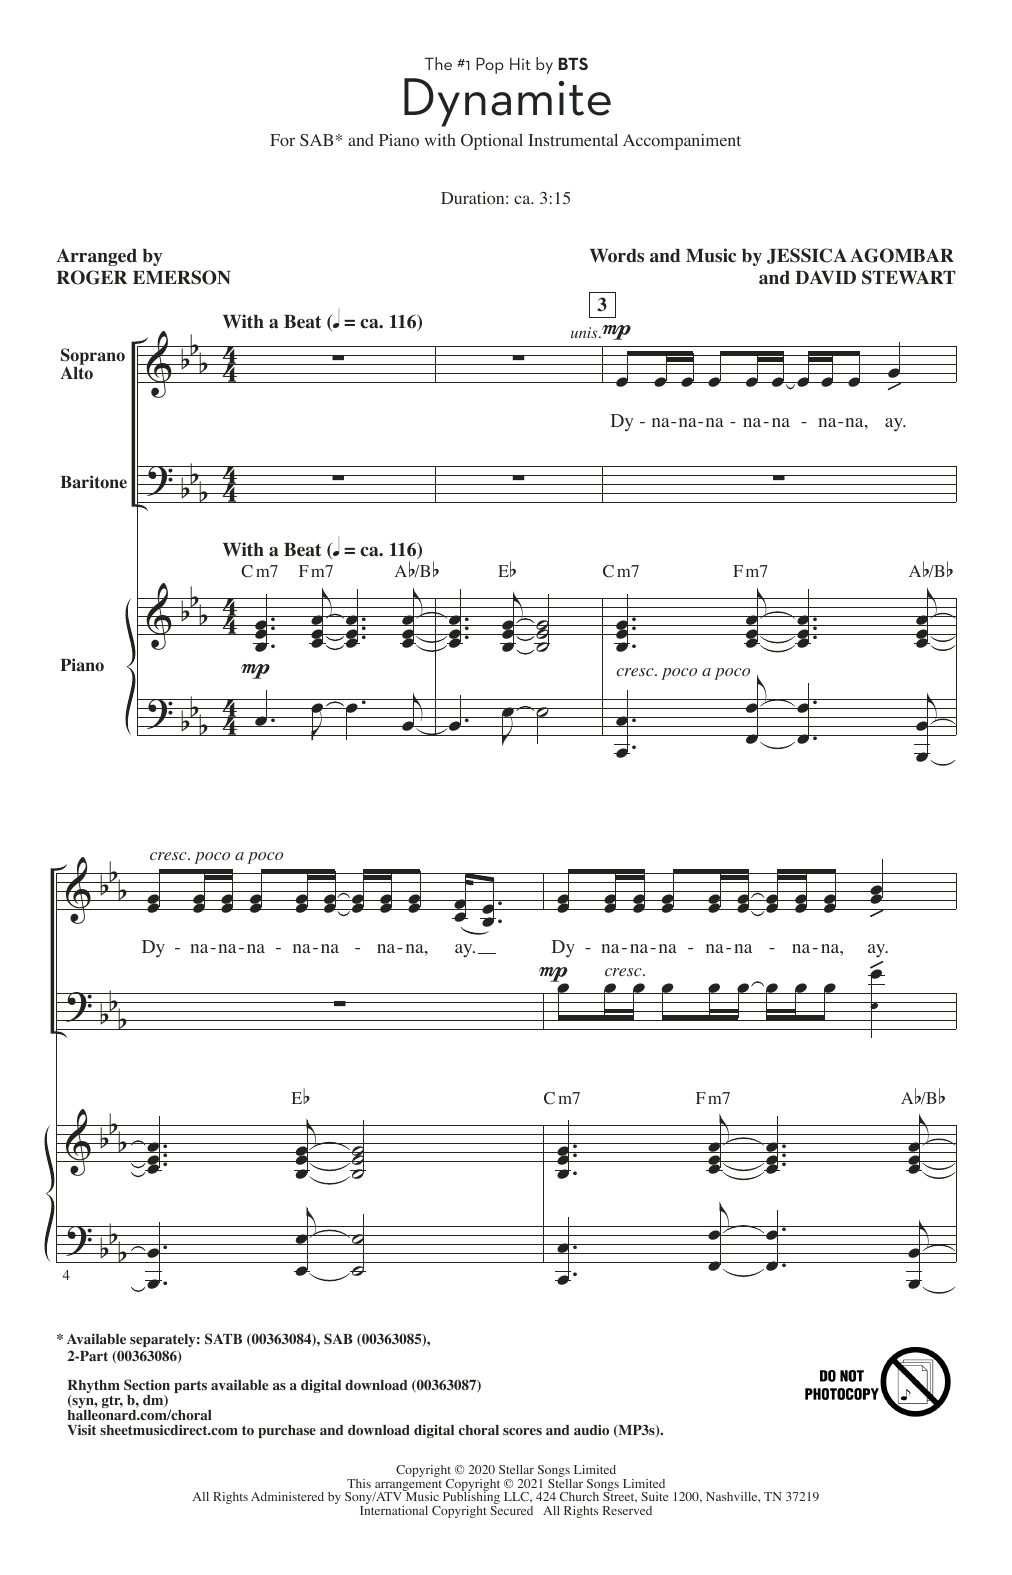 BTS Dynamite (arr. Roger Emerson) Sheet Music Notes & Chords for SATB Choir - Download or Print PDF